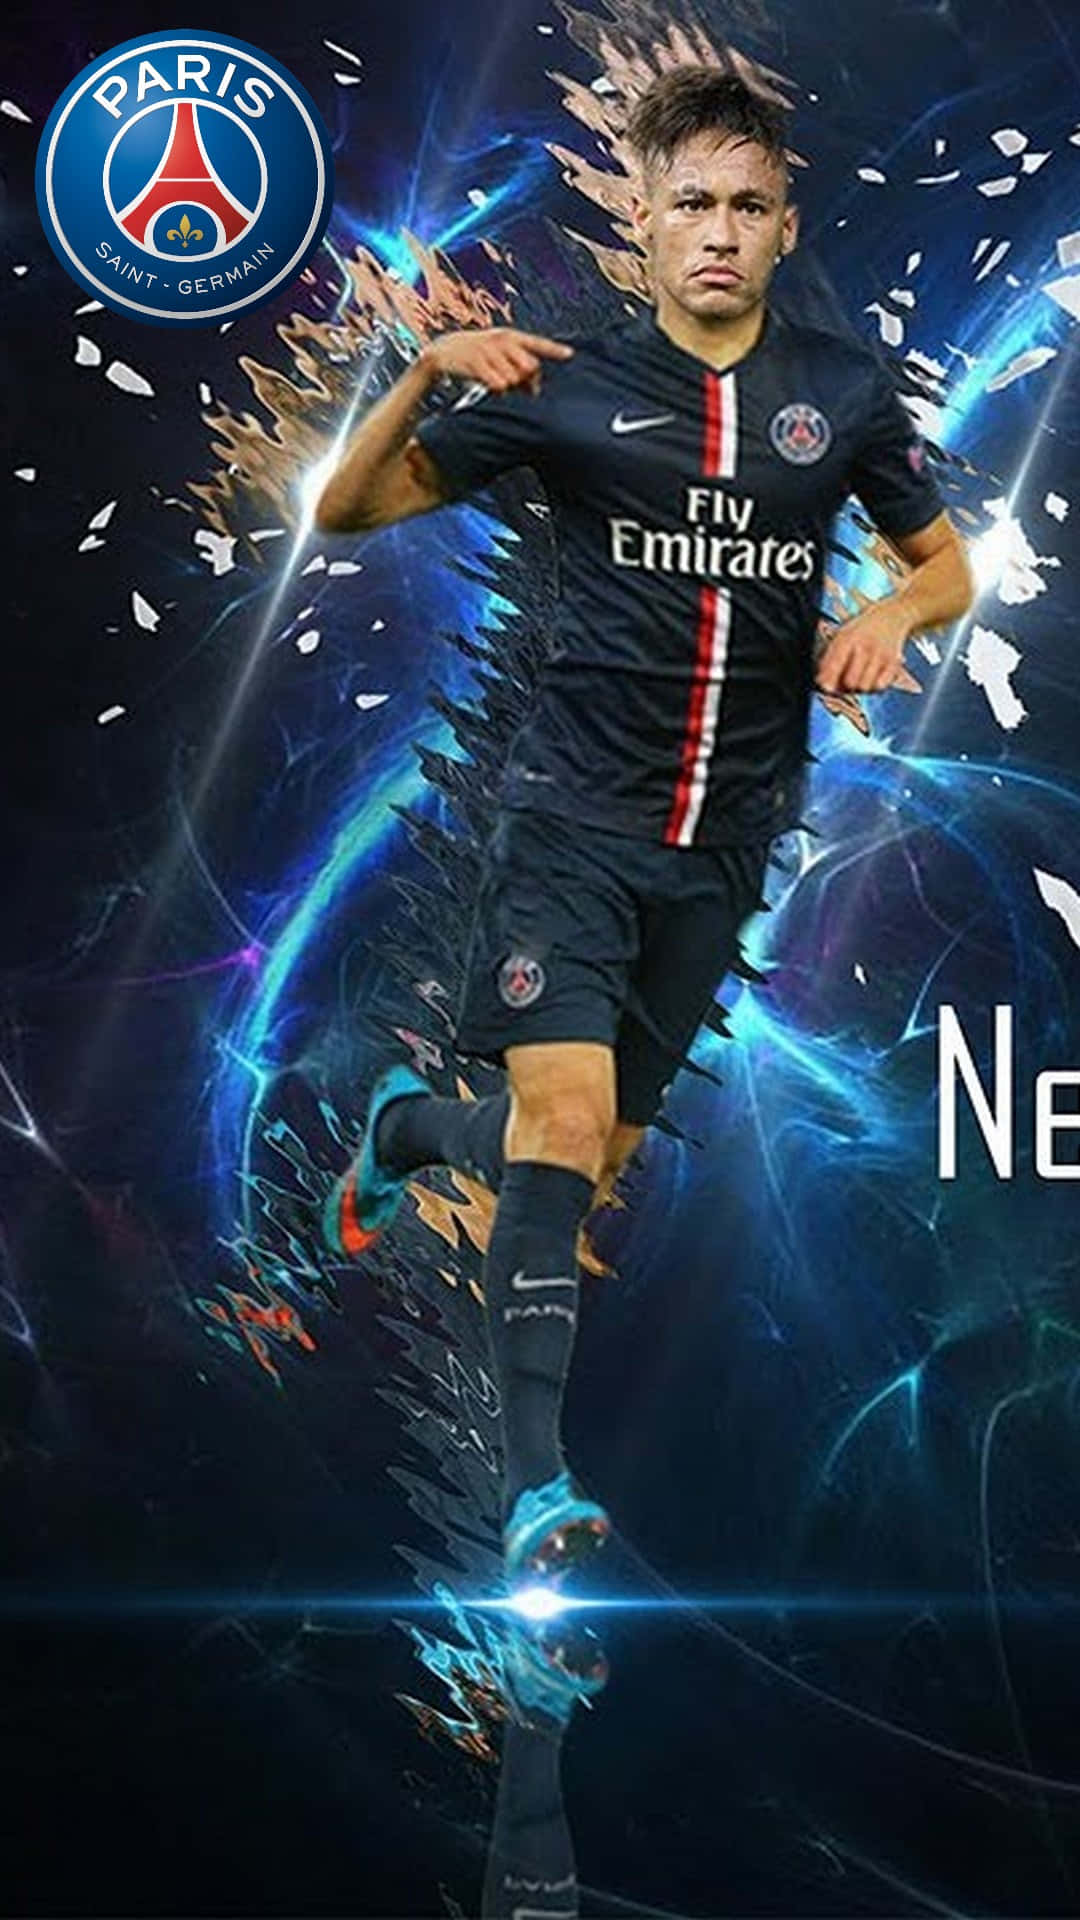 Captivating Neymar Jr Image for iPhone Background Wallpaper